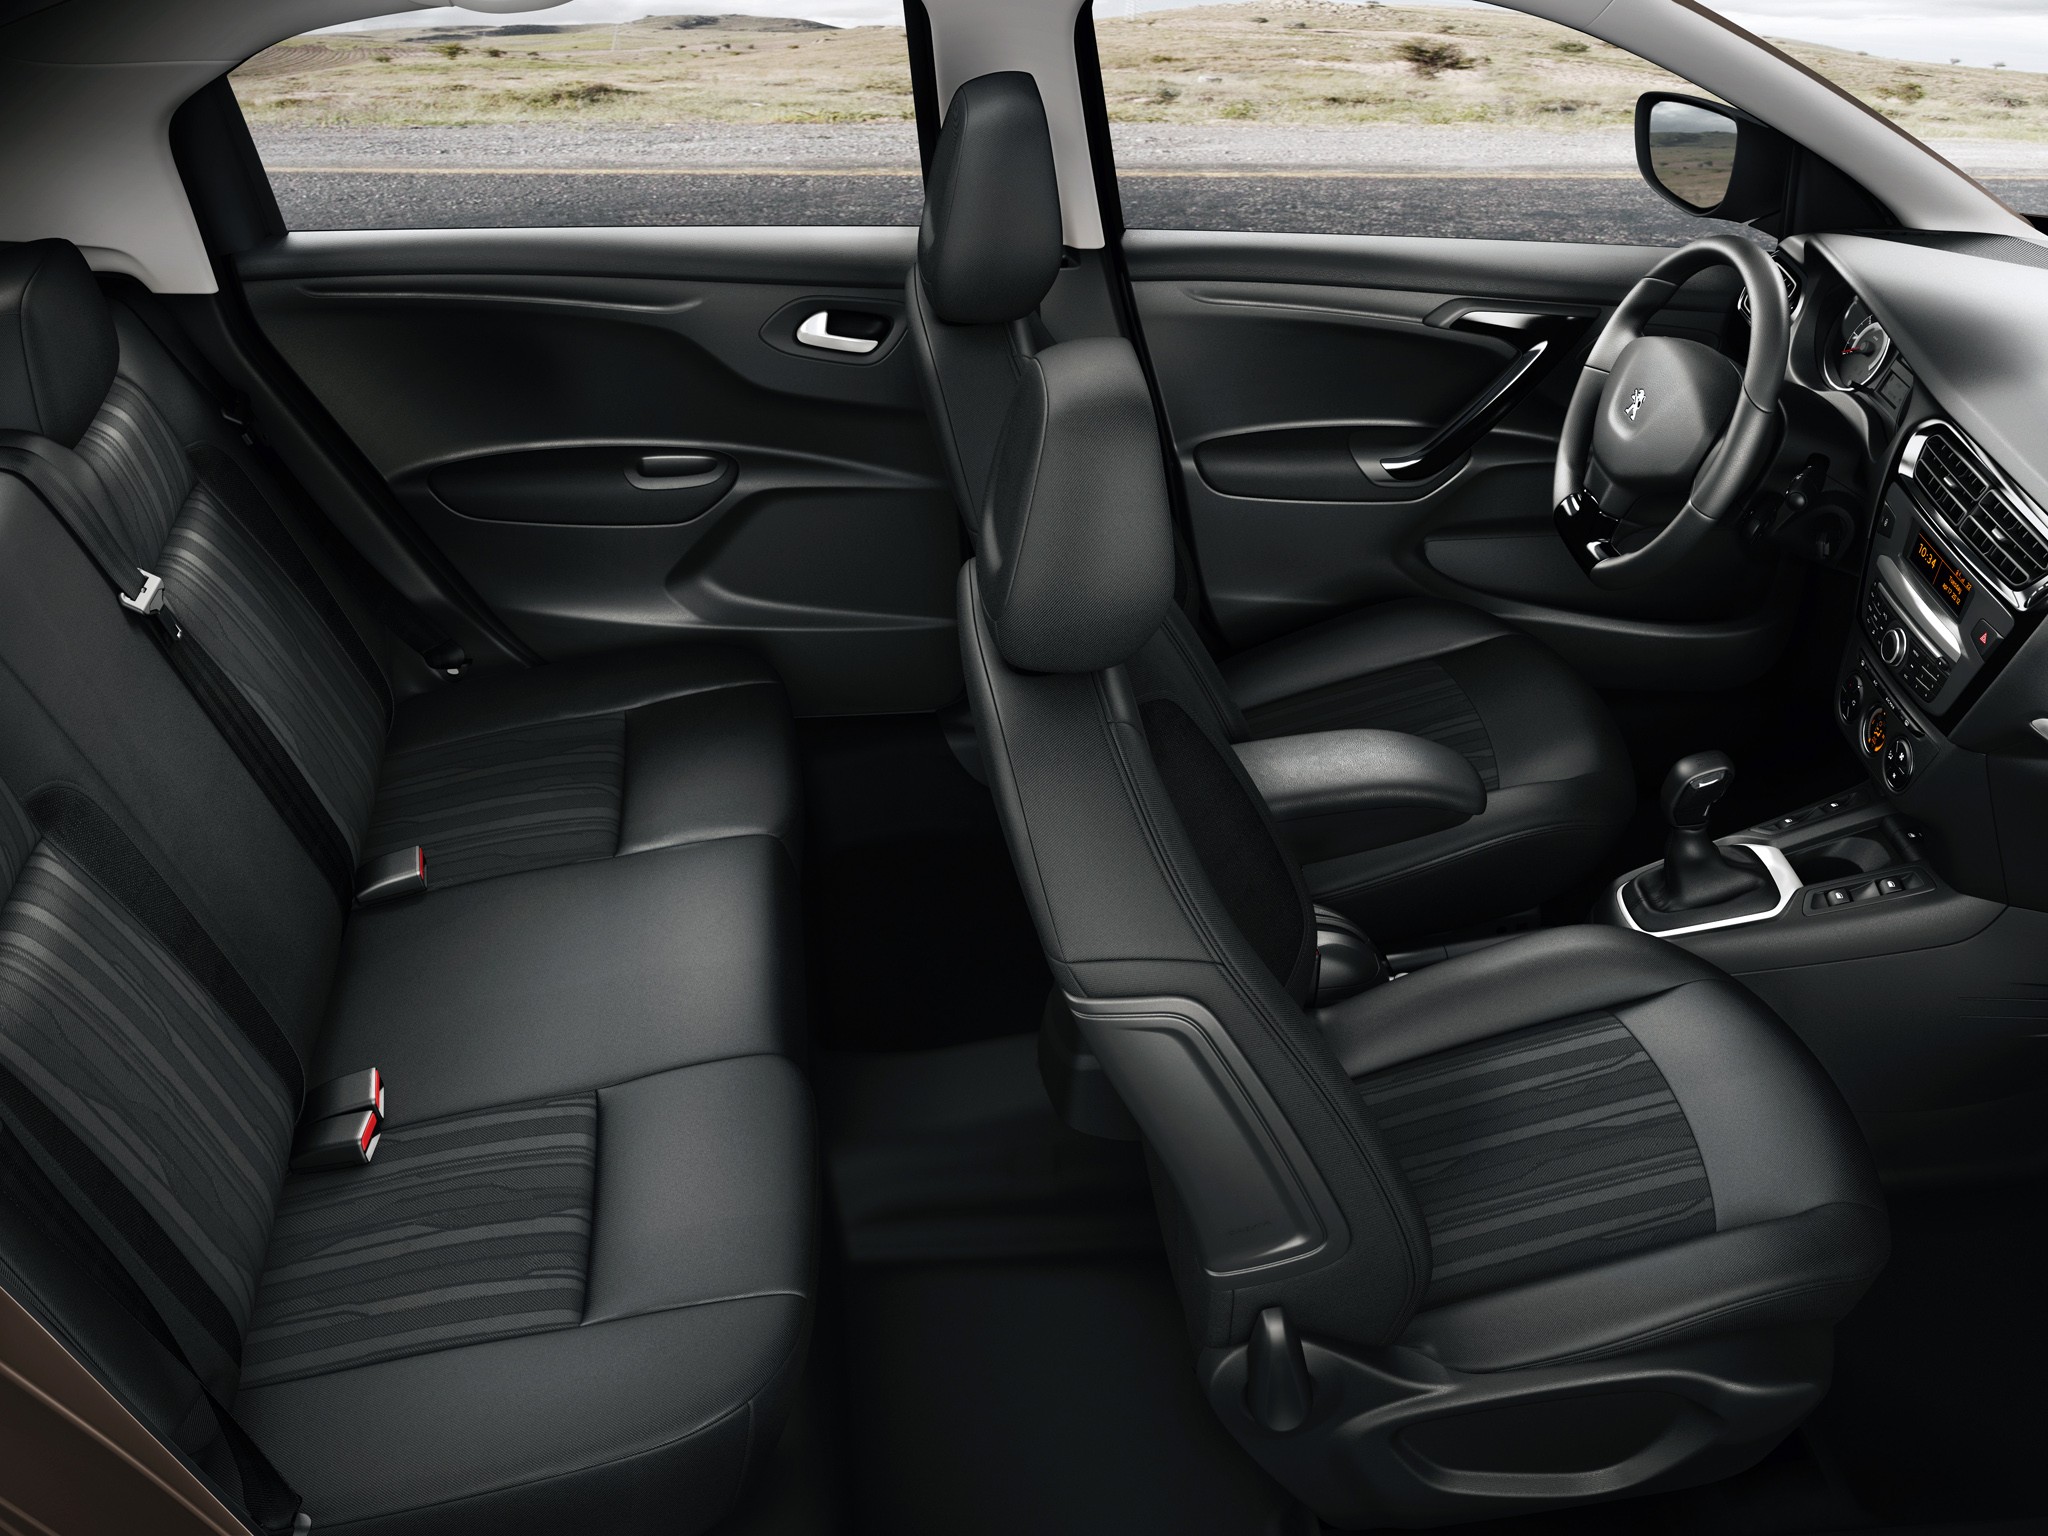 Peugeot 301 interior - Seats